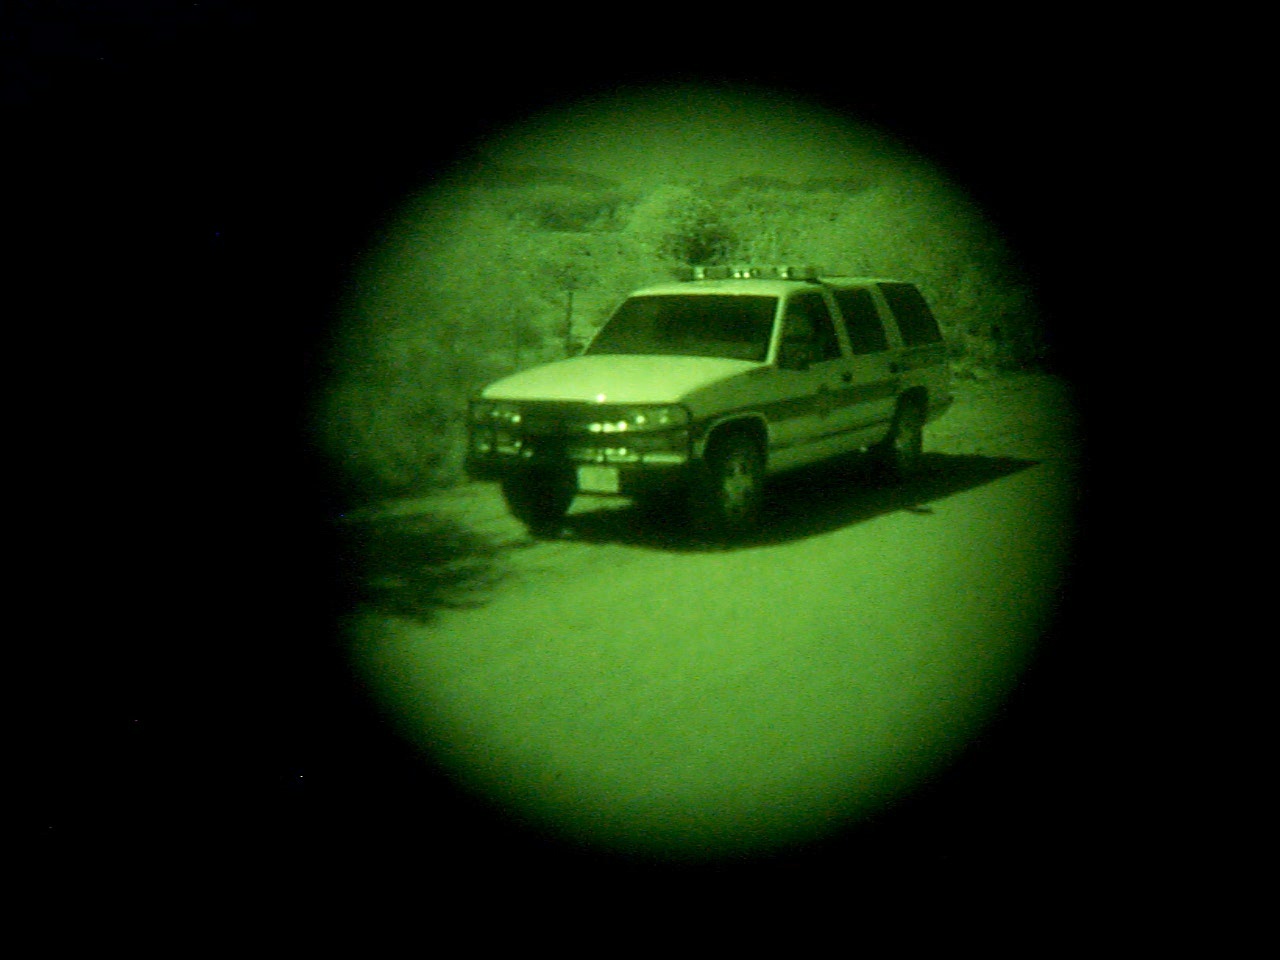 A Border Patrol vehicle as seen through a night vision scope